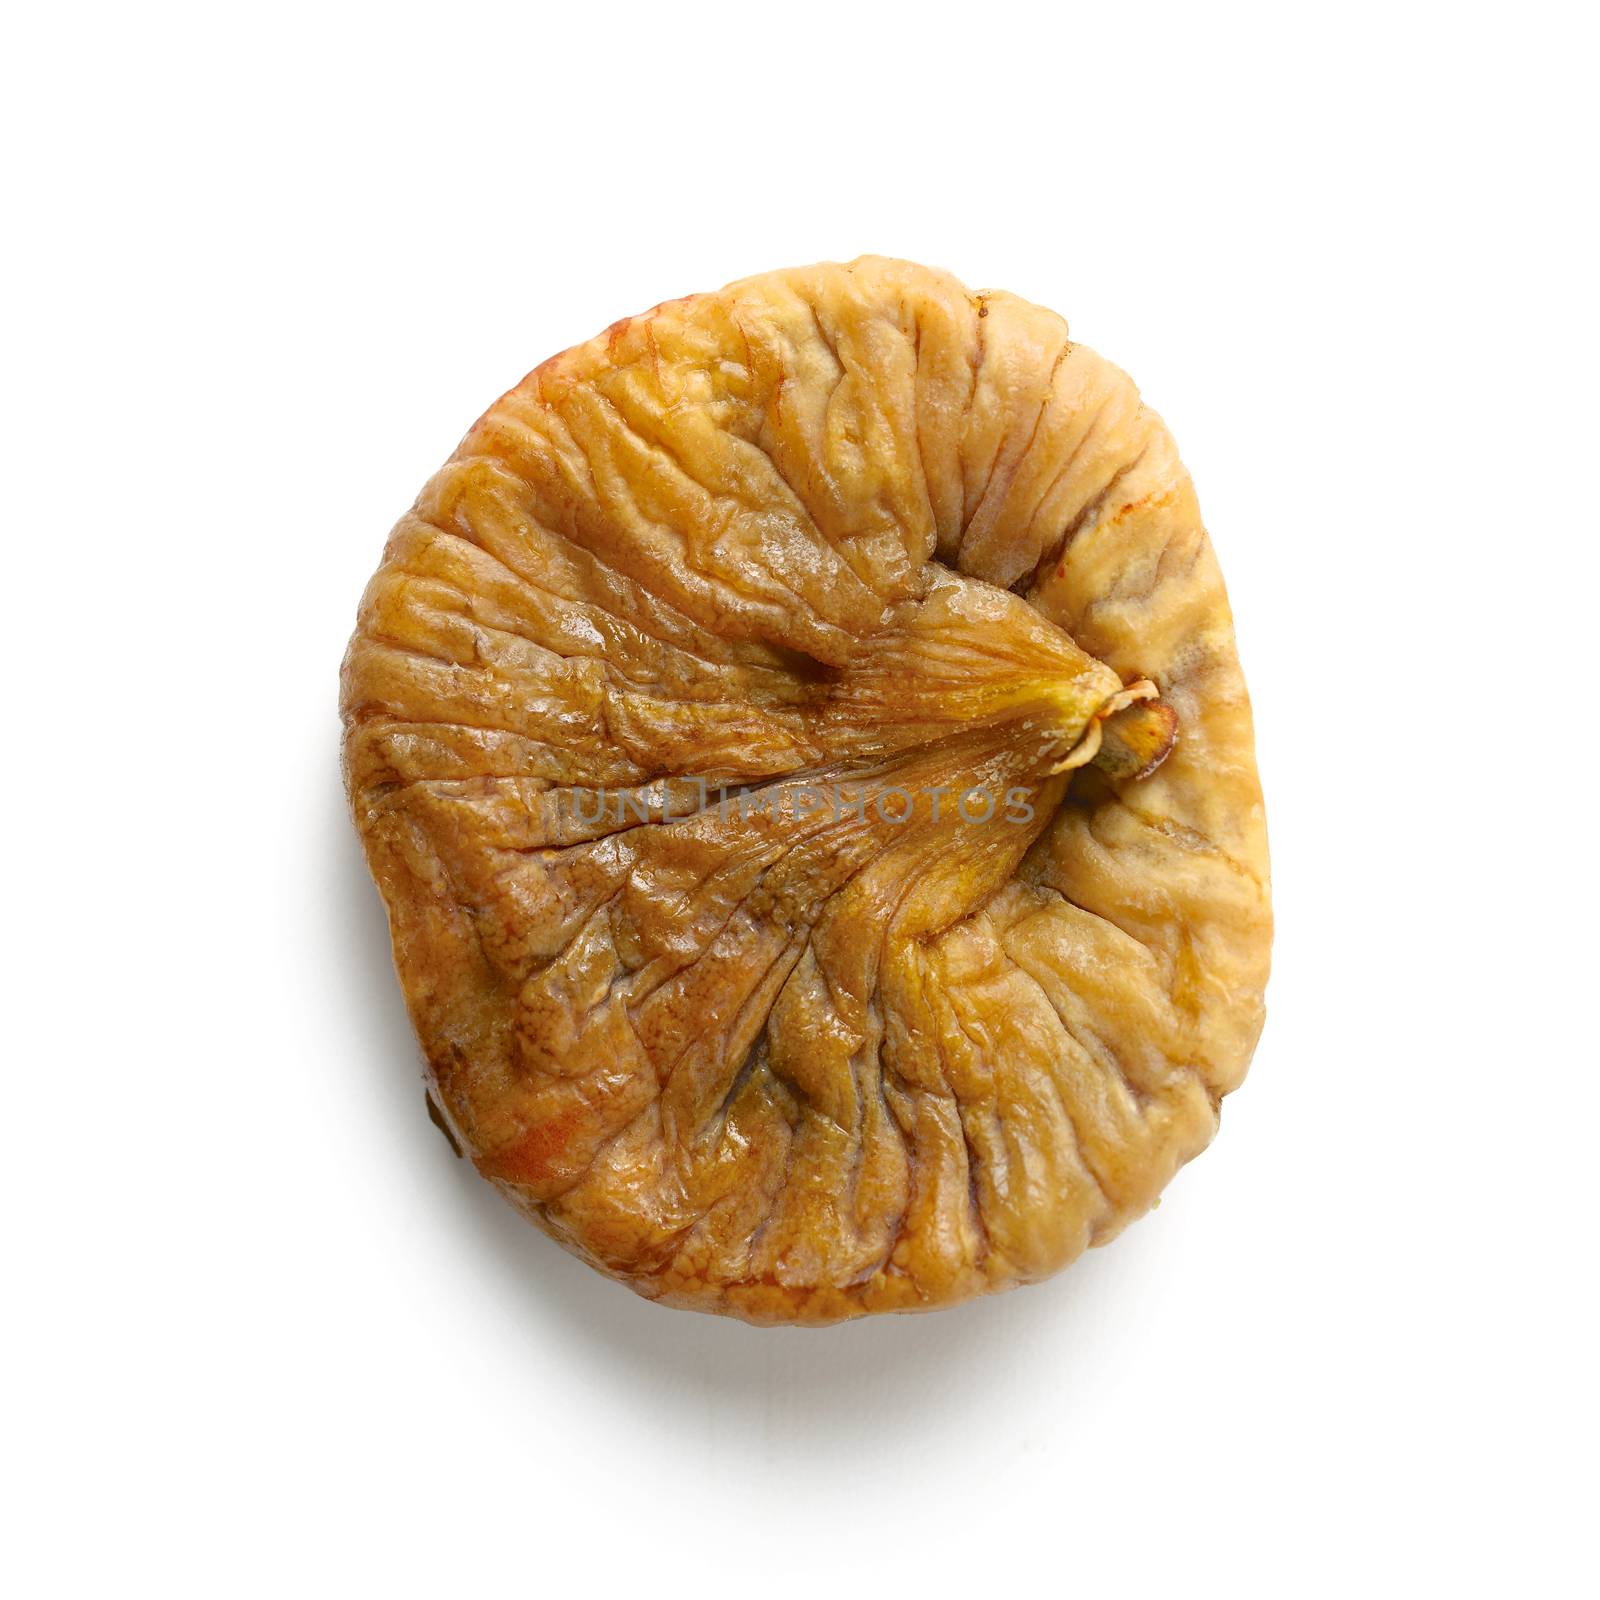 Dried figs by antpkr